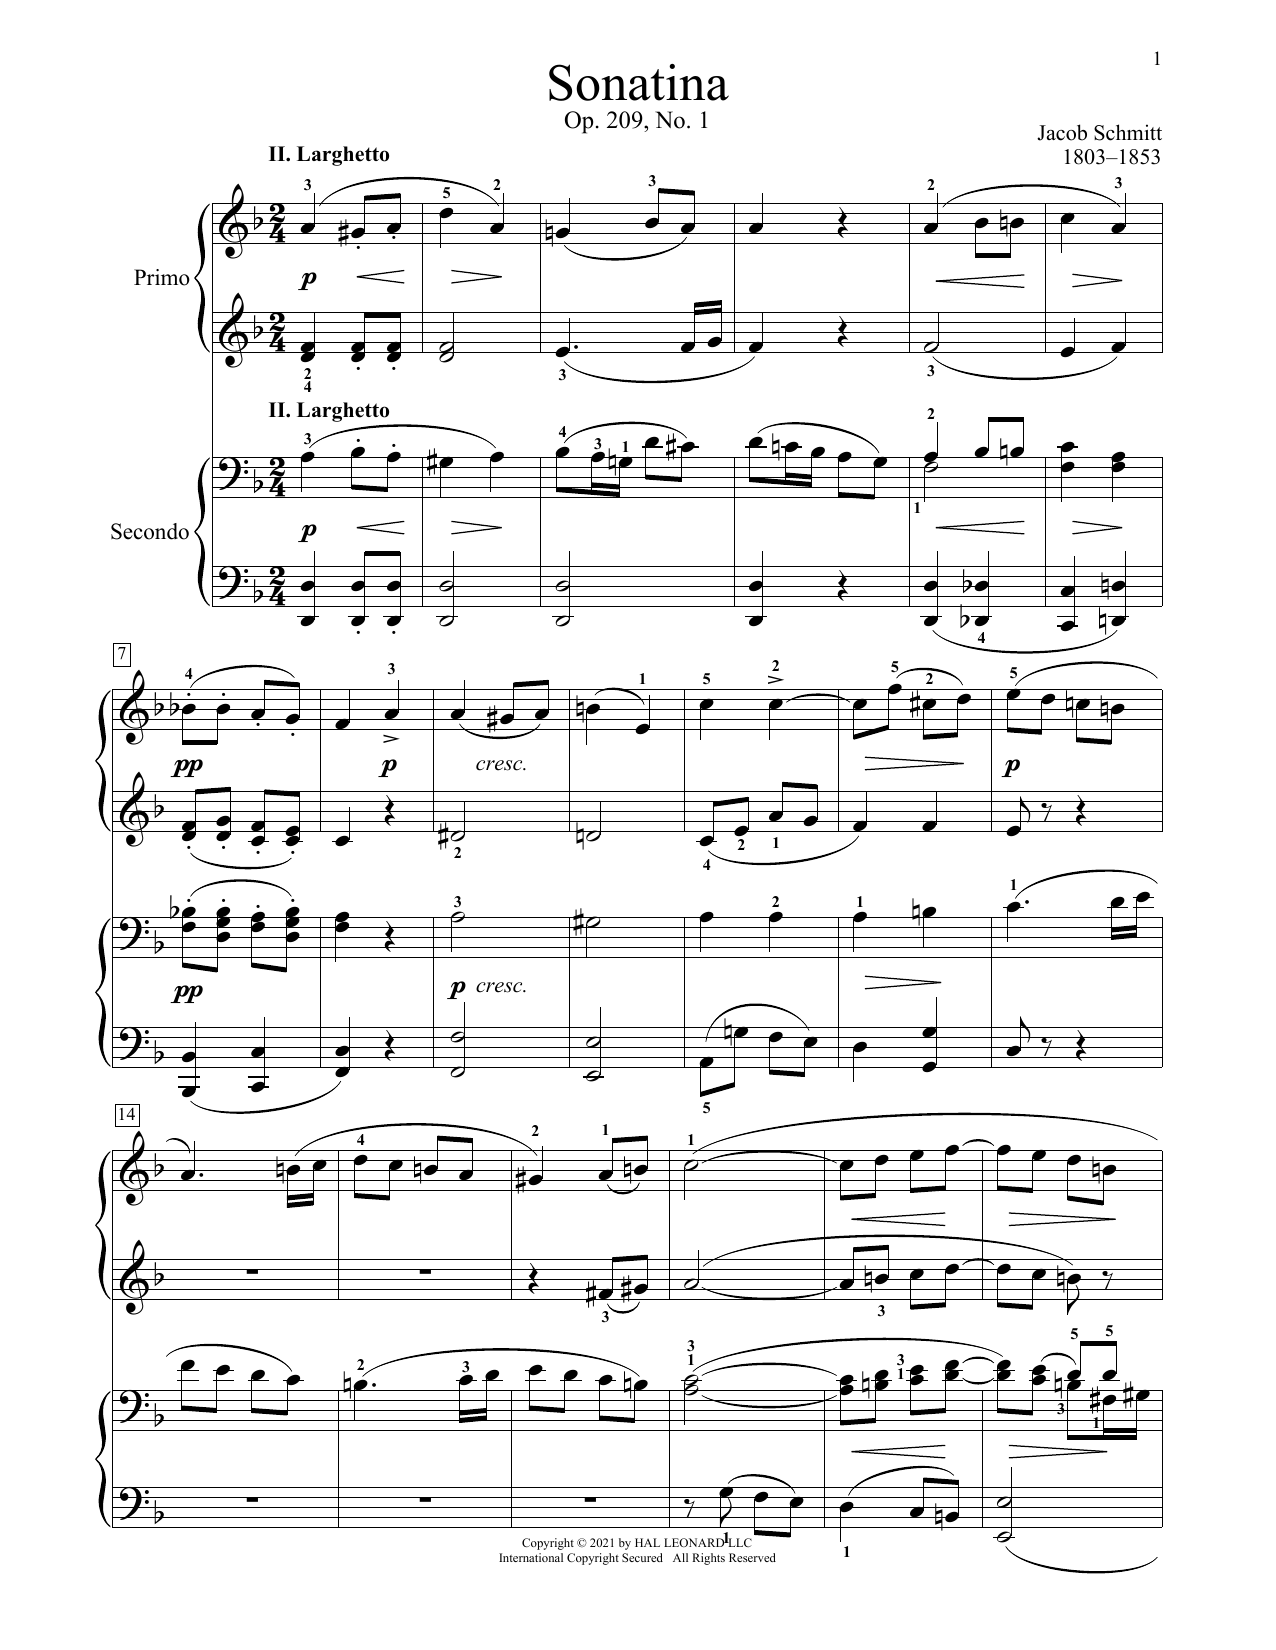 Jacob Schmitt Sonatina, Op. 209, No. 1, II. Larghetto sheet music notes and chords arranged for Piano Duet